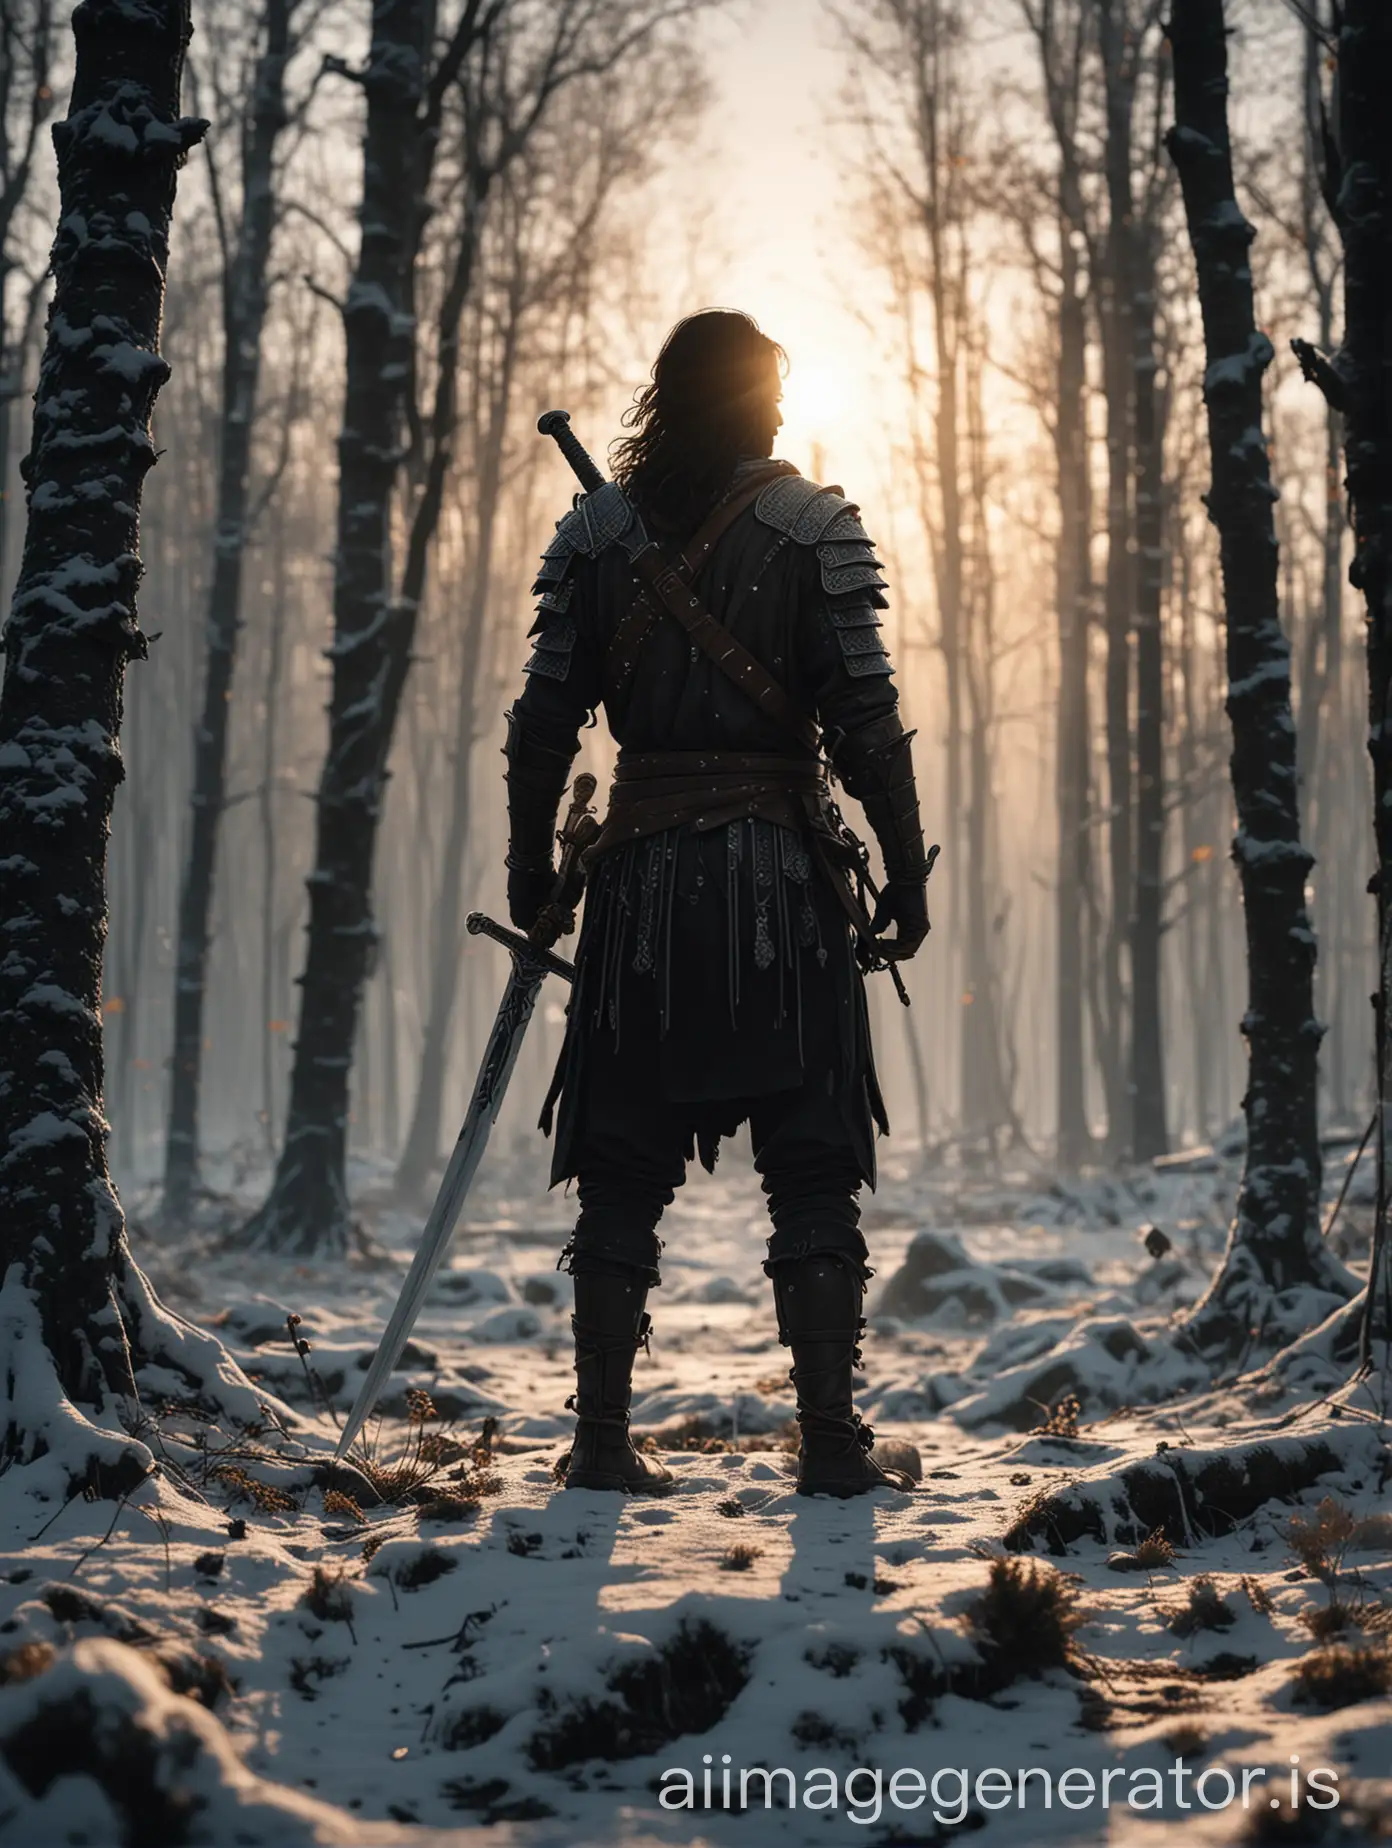 SwordWielding-Warrior-Amidst-Enchanting-Winter-Woods-at-Sunset